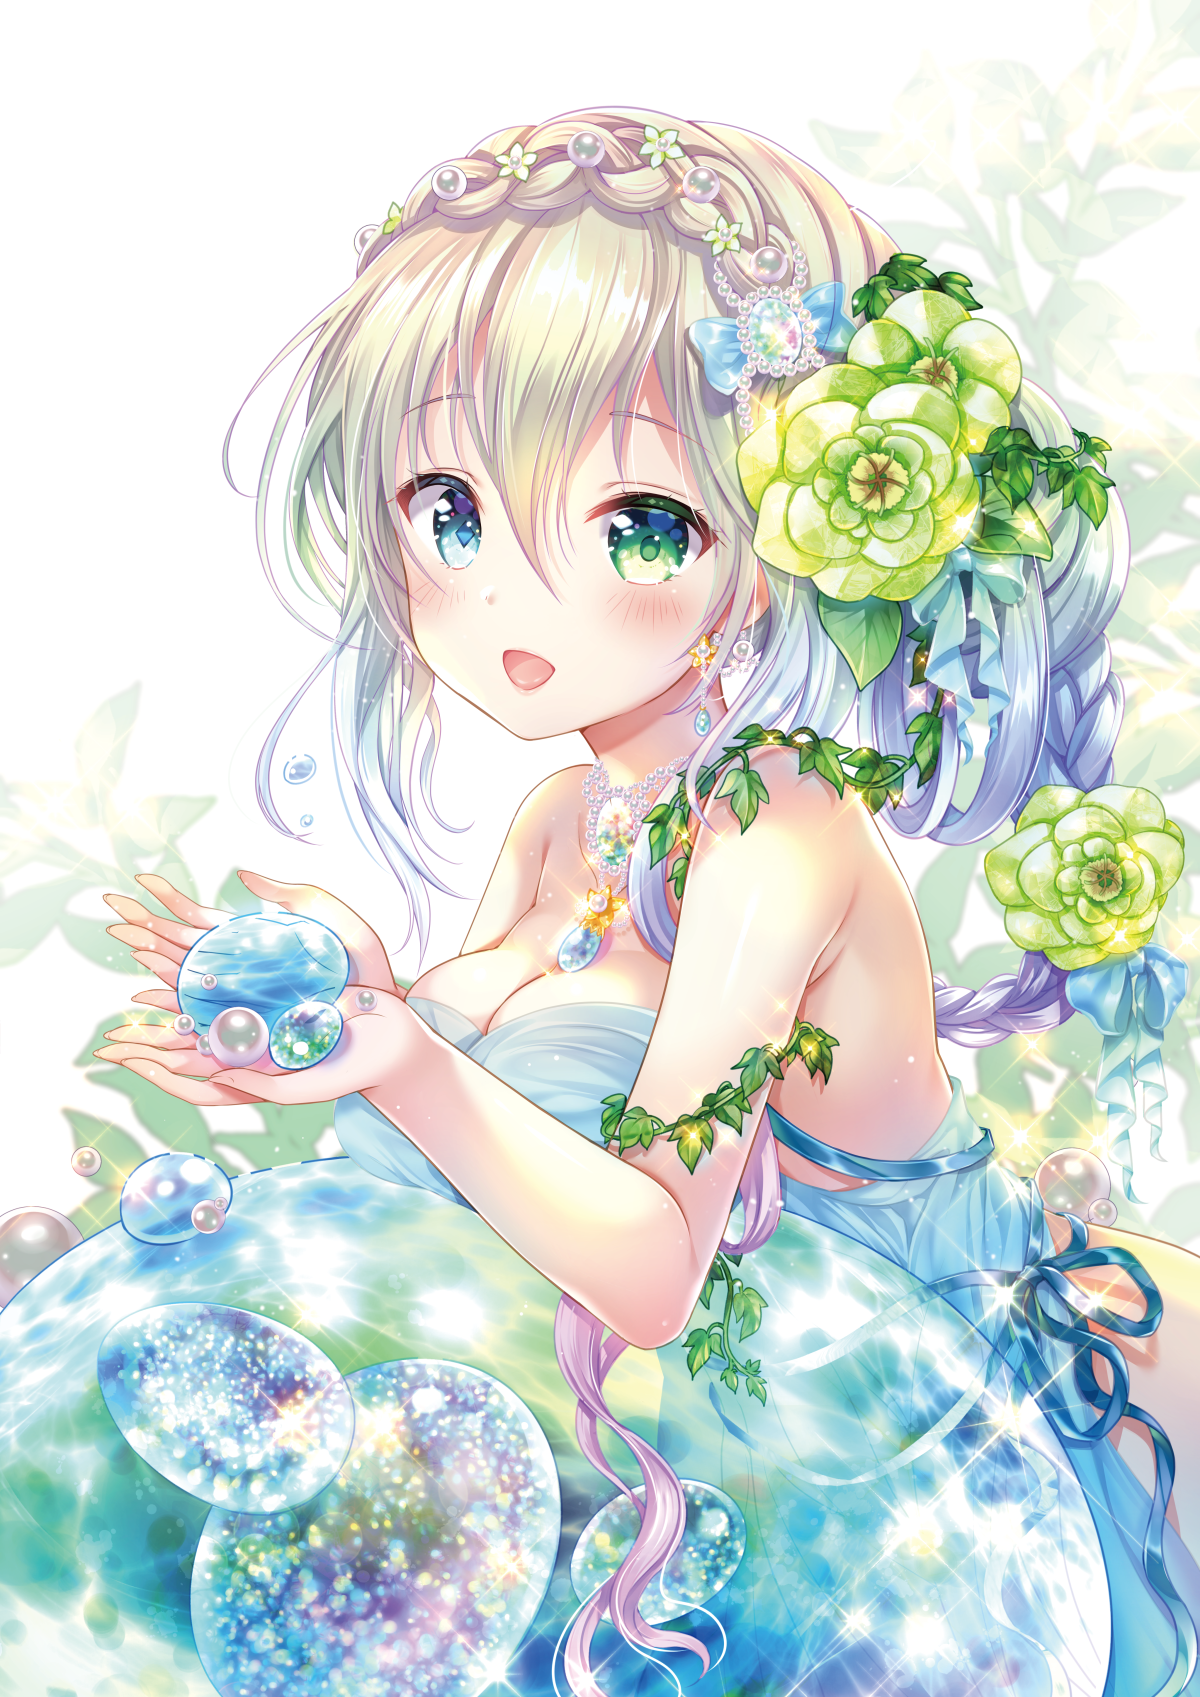 Anime 1200x1697 anime anime girls digital art artwork 2D portrait display flowers Sakura Moyon heterochromia